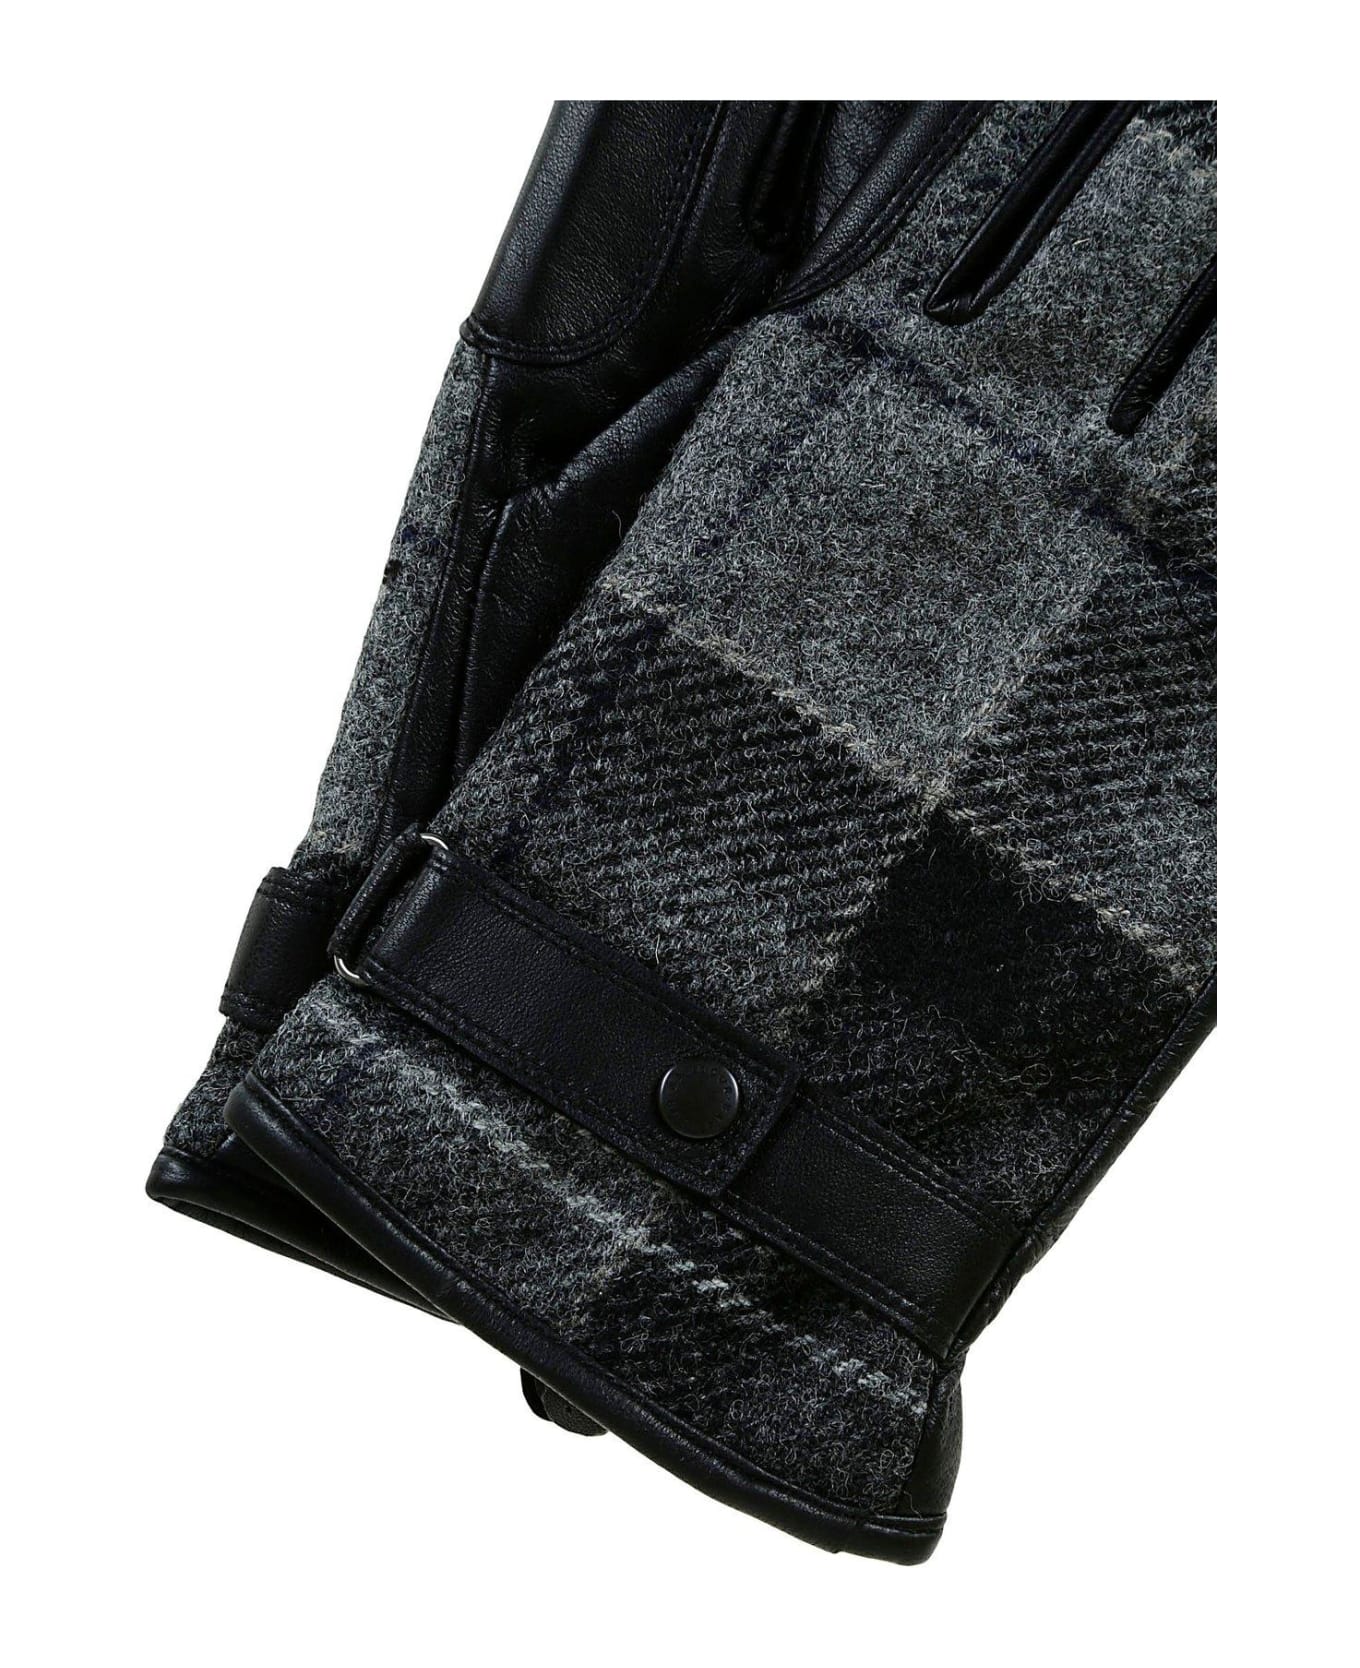 Barbour Black And Grey Tartan Wool Gloves - Black/grey